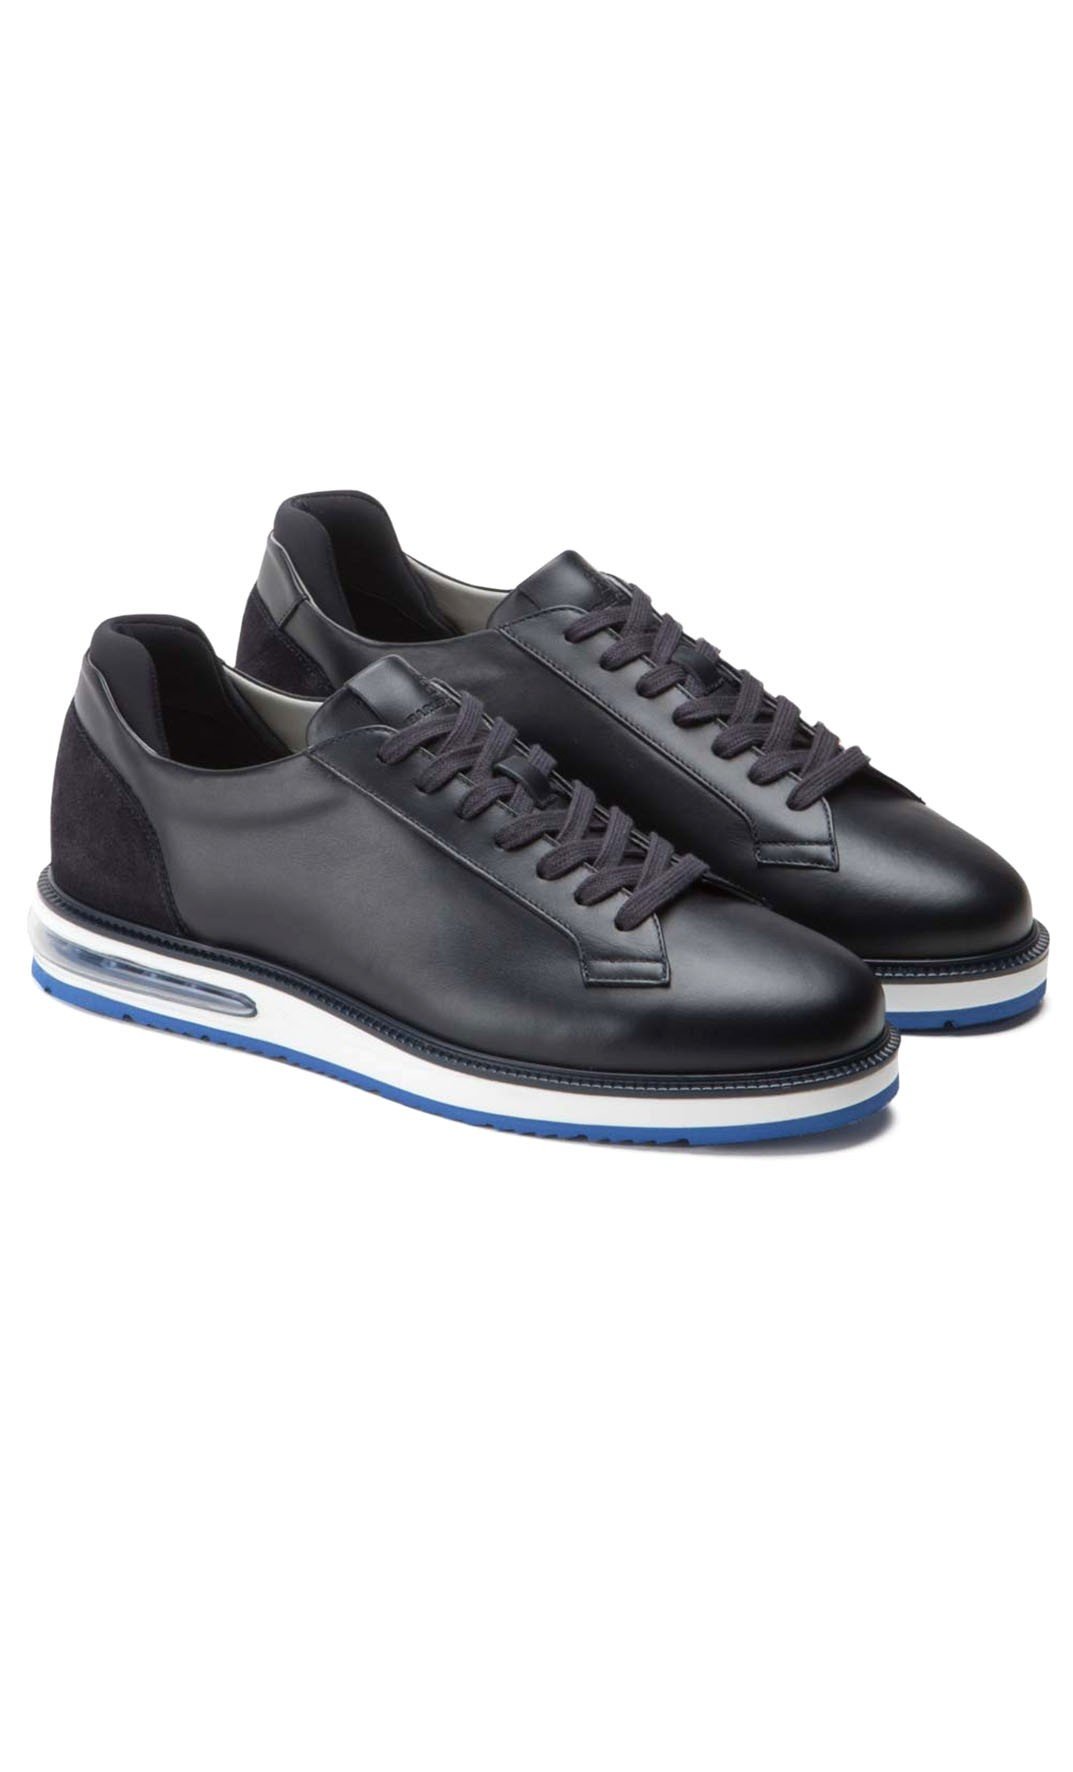 Men's shoes Barleycorn air smash blue leather S20A8720MCS11XE